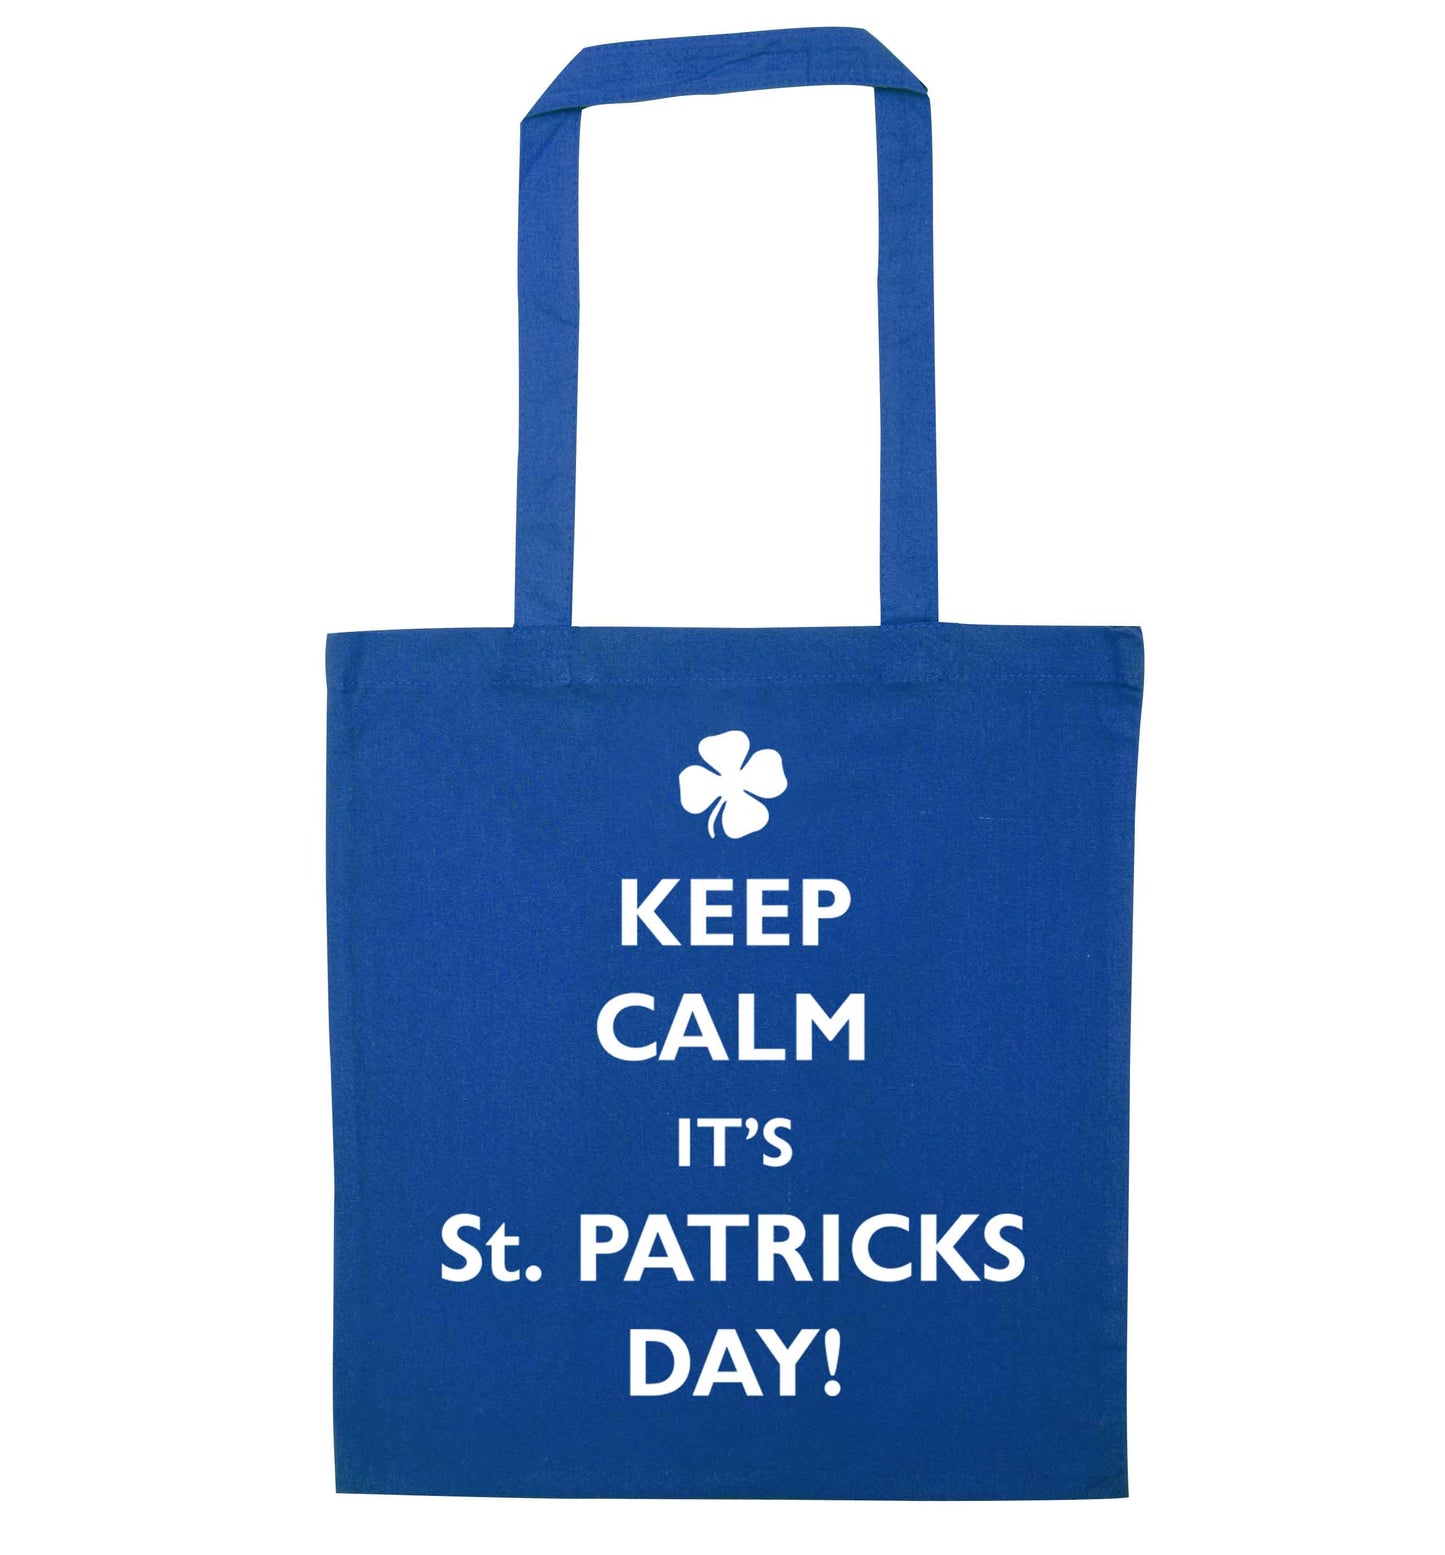 Keep calm it's St.Patricks day blue tote bag